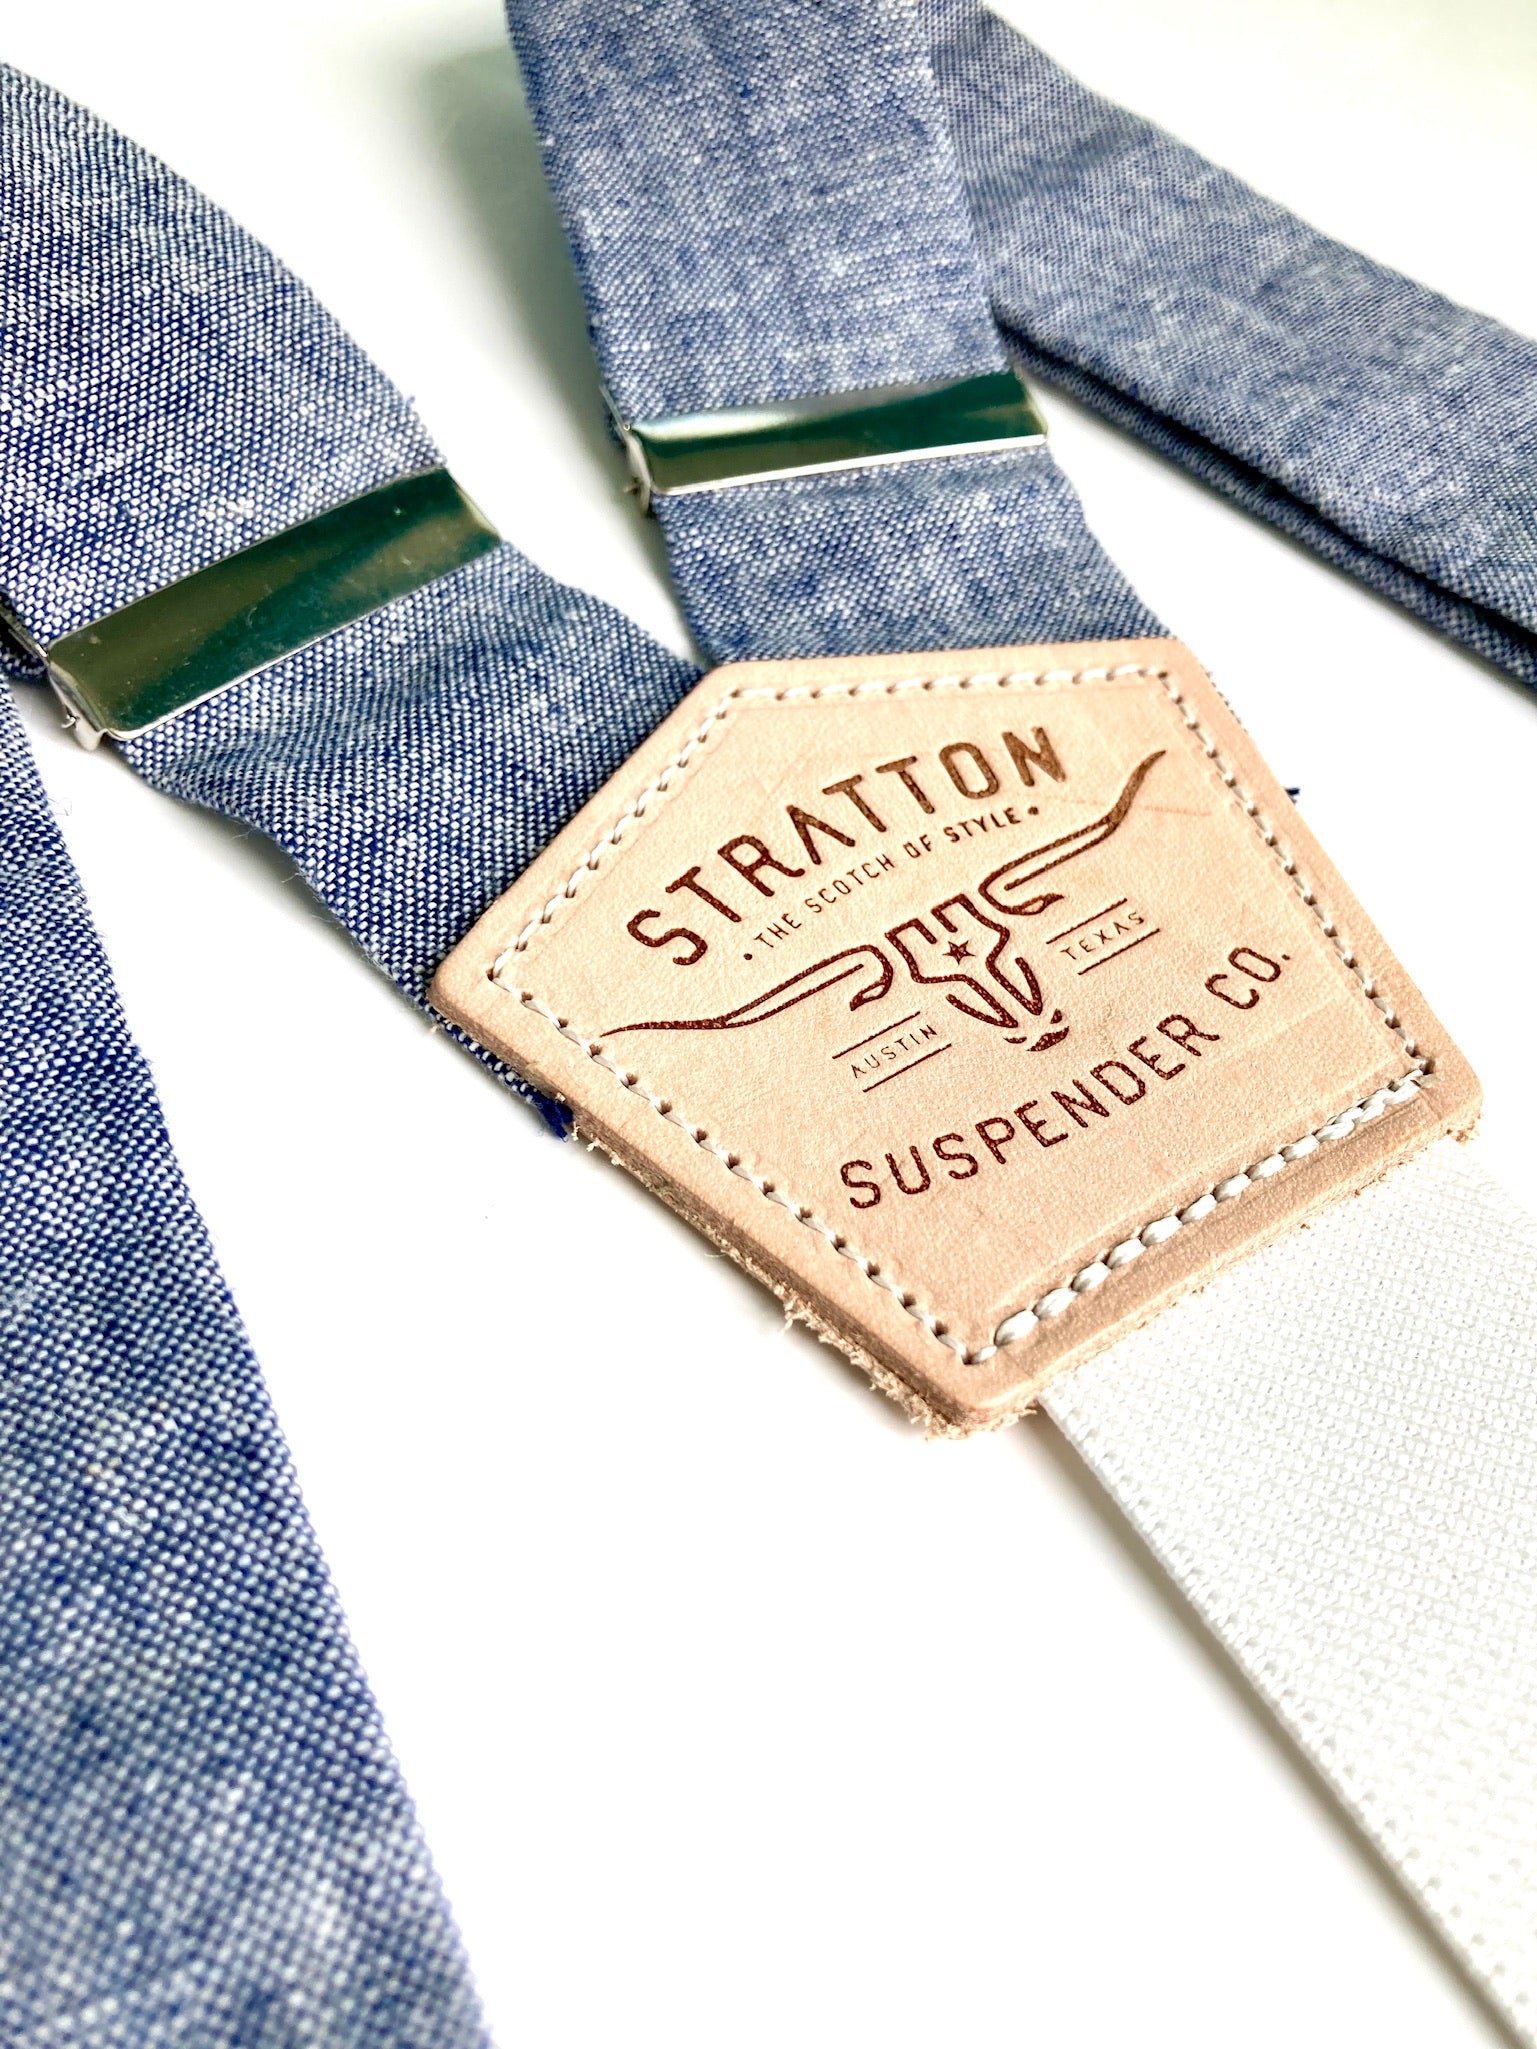 Stratton Suspenders in Blue Bonnet Blue Linen 